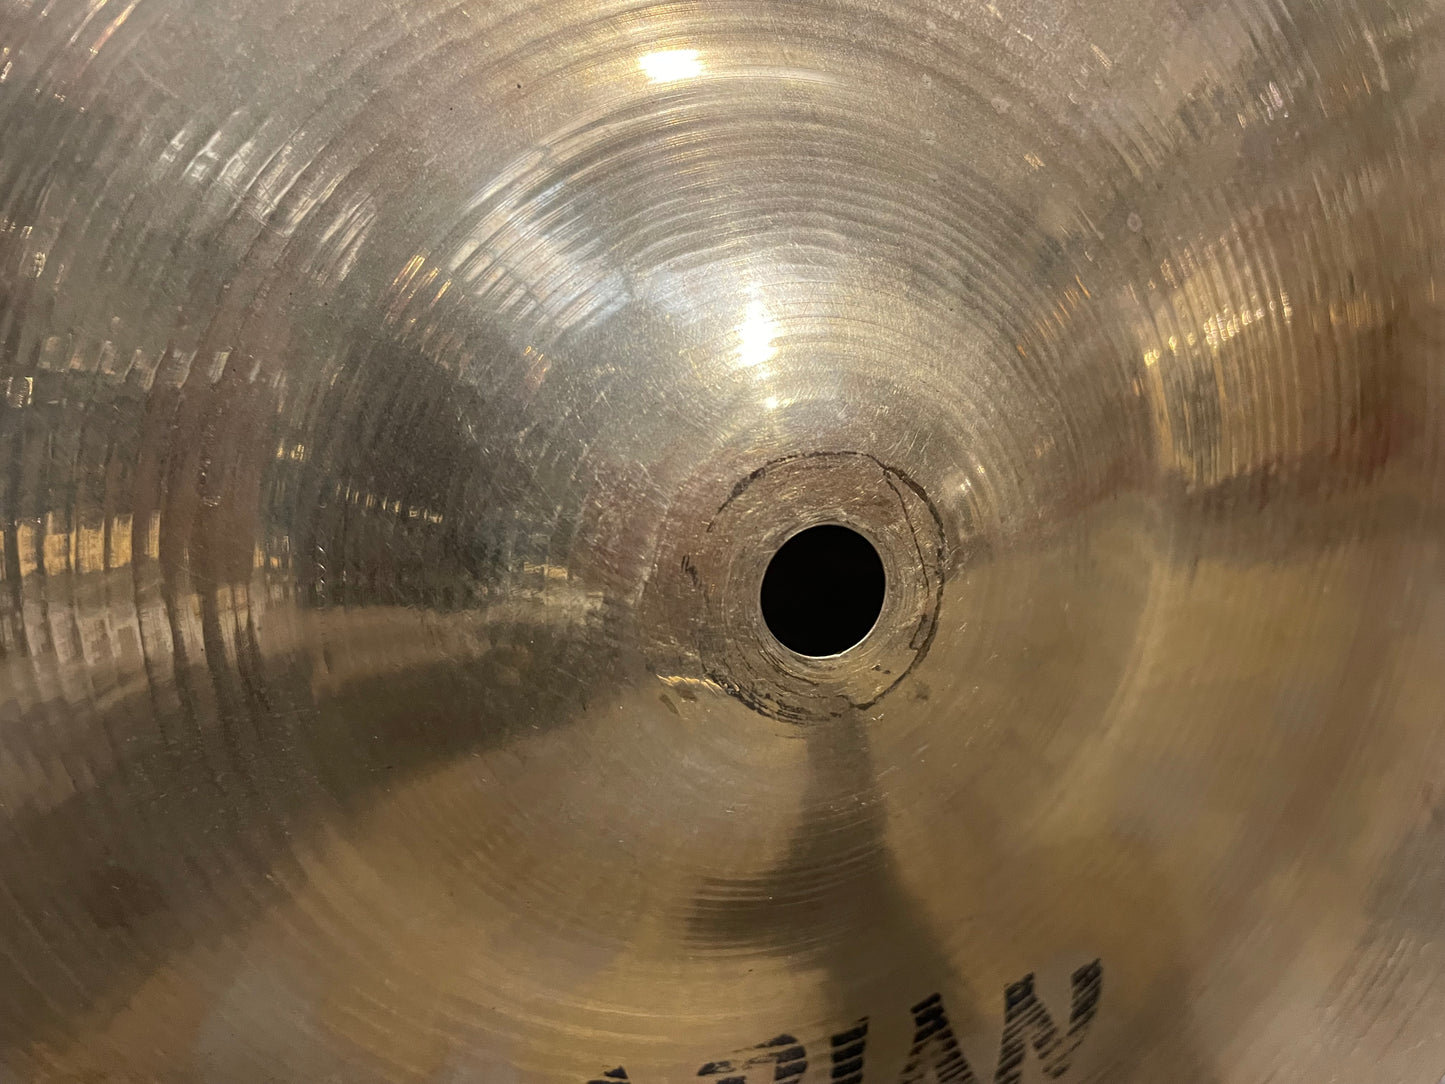 Sabian HH Mini Chinese 12”/30cm China Cymbal / Drum Accessory #IL7